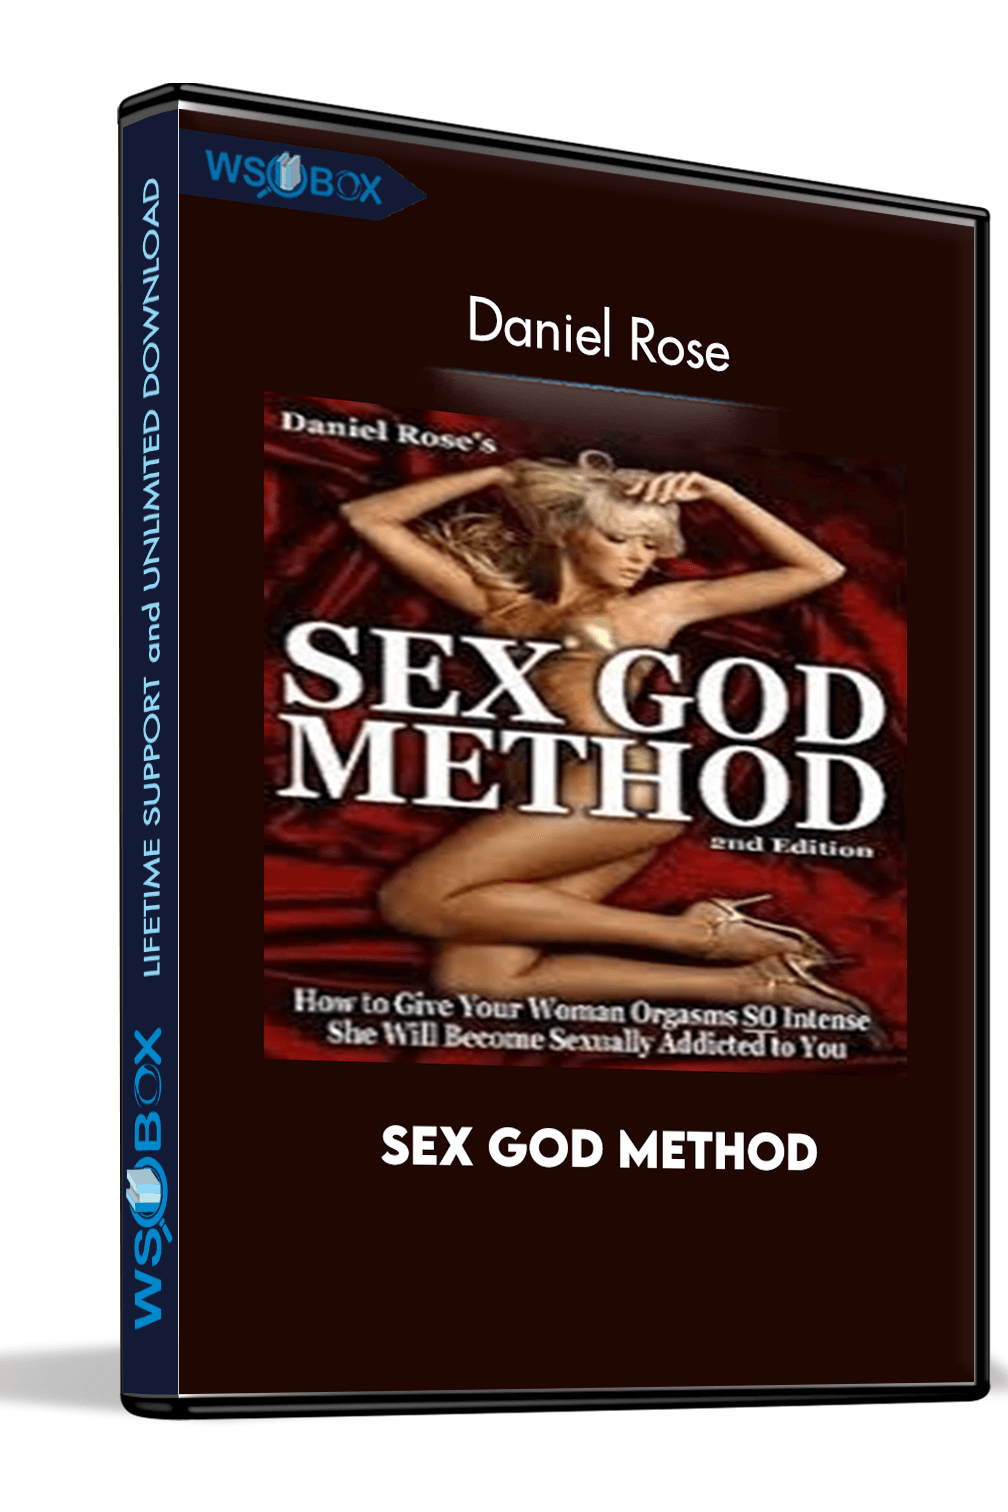 sex-god-method-daniel-rose